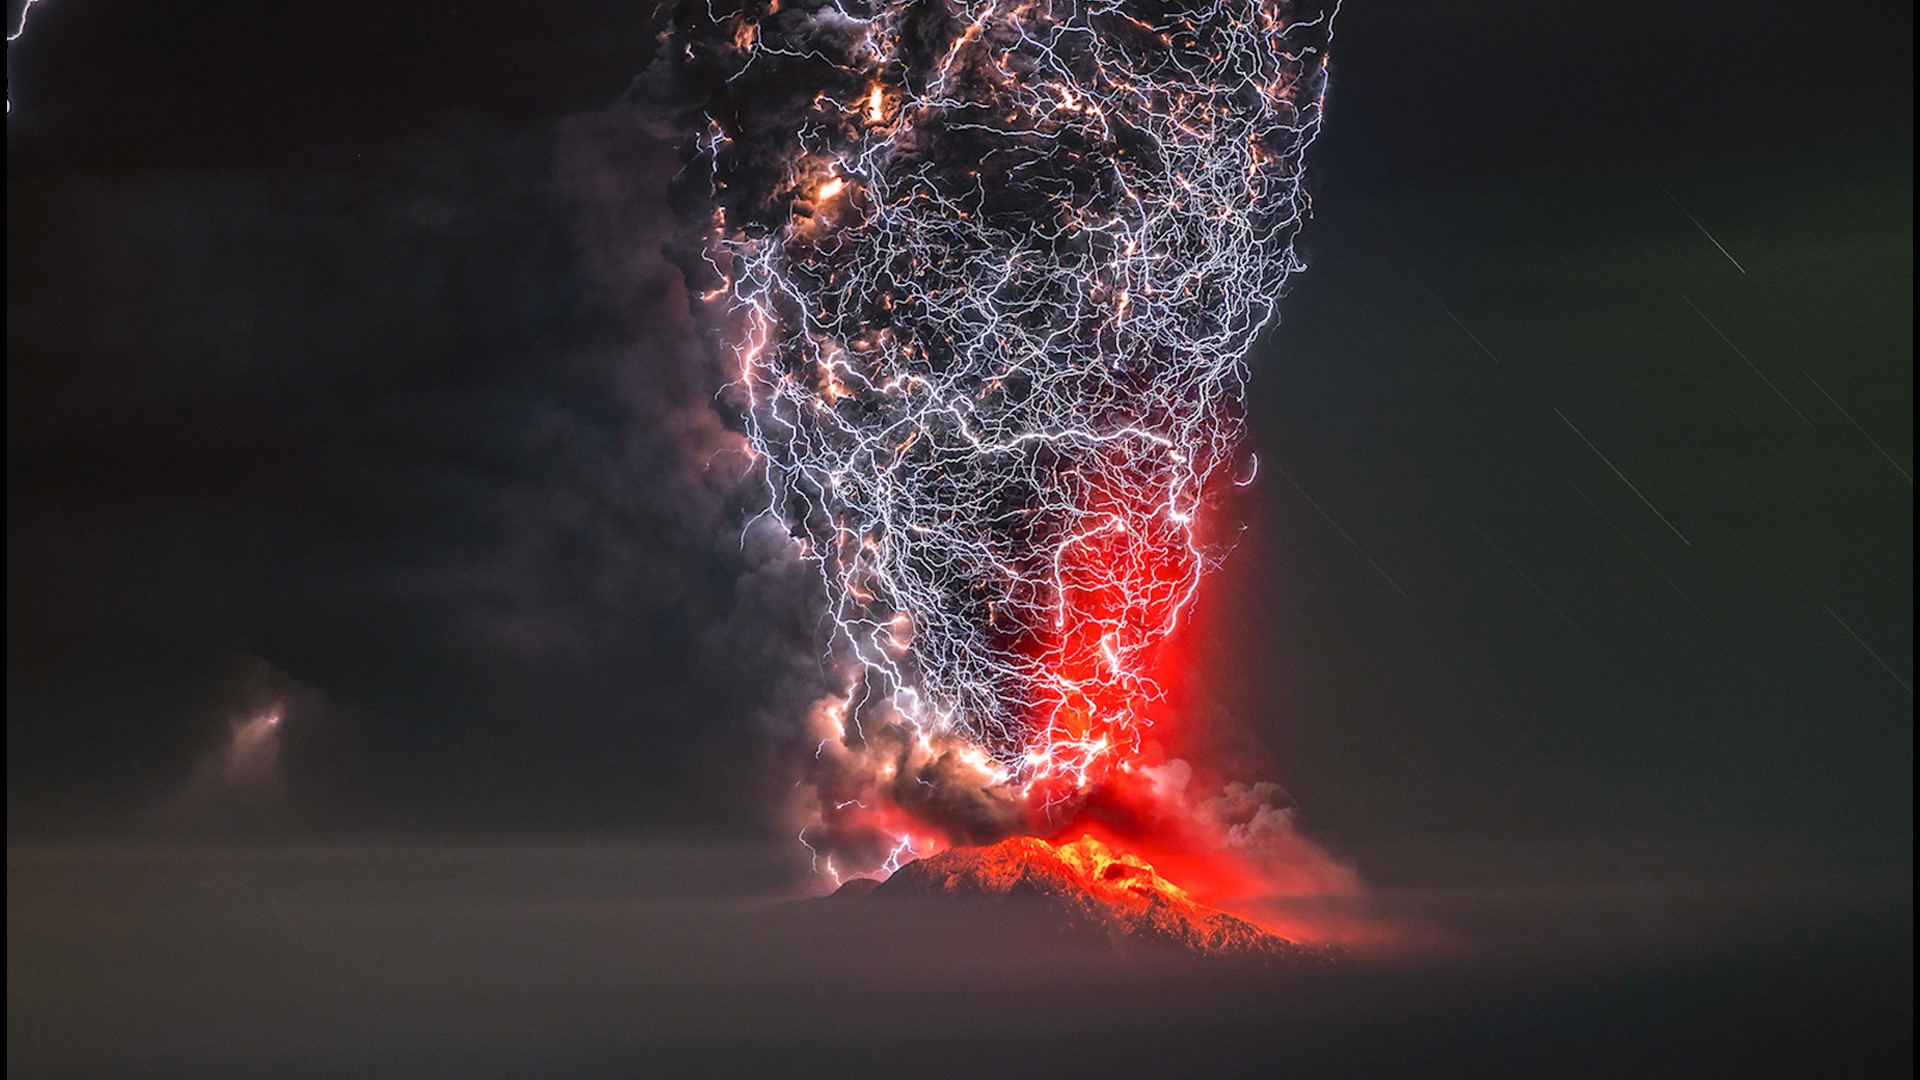 Photo: Prize Winning Volcano Lightning Storm Image Is Stunning